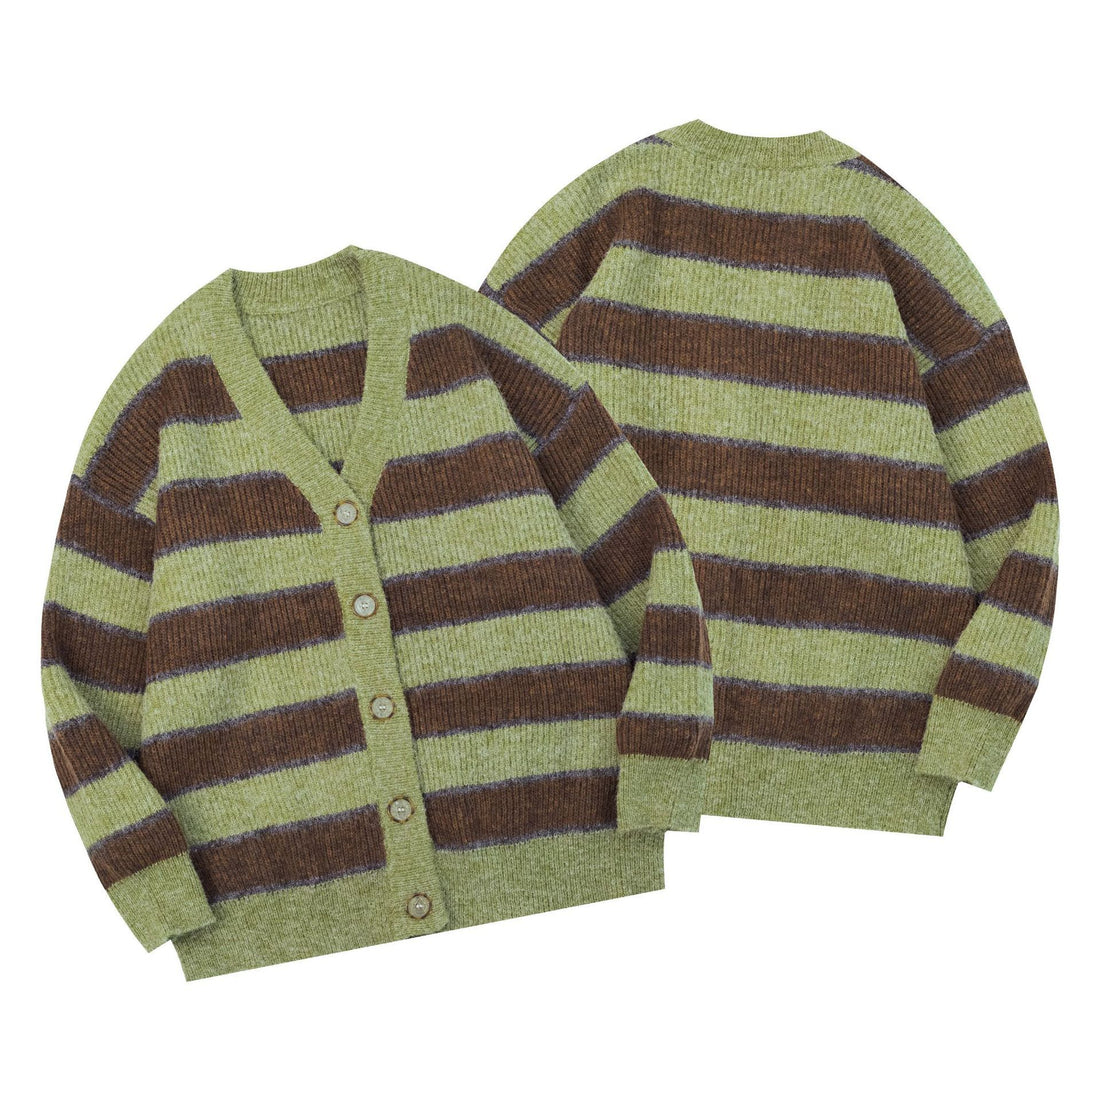 Cardigan Knit Striped Sweater Women